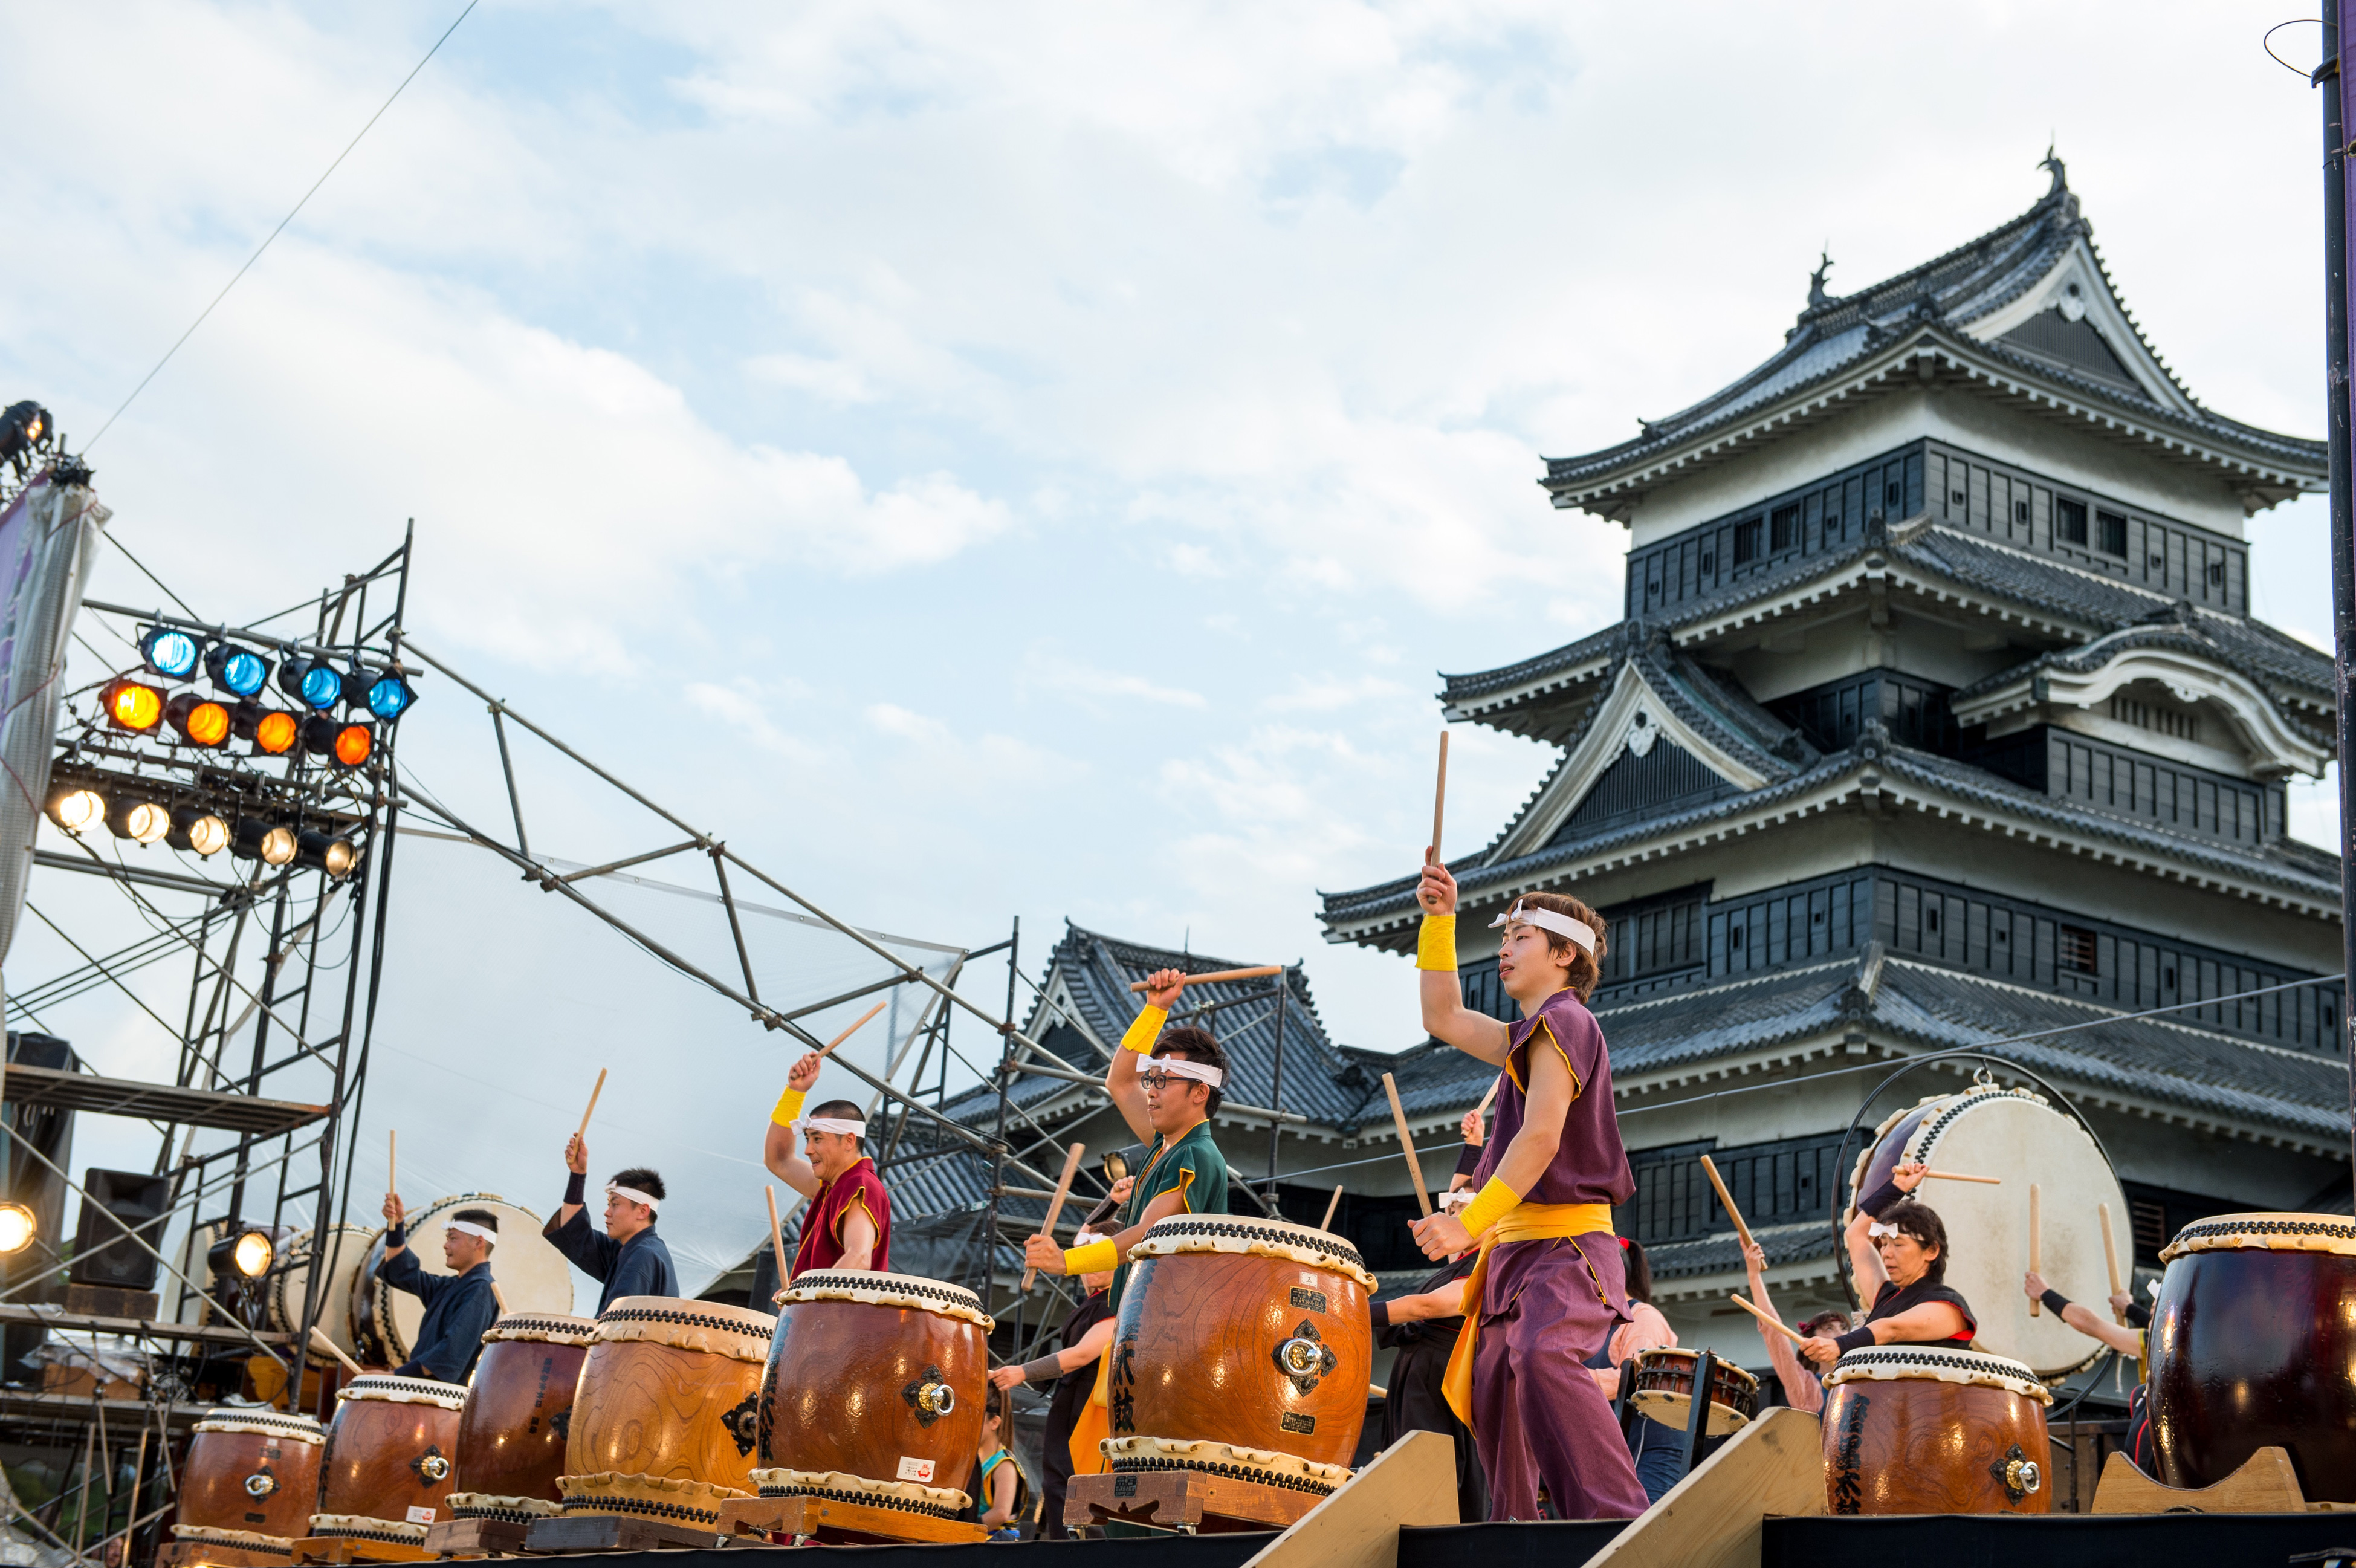 Matsumoto Drum Festival in Nagano Japan